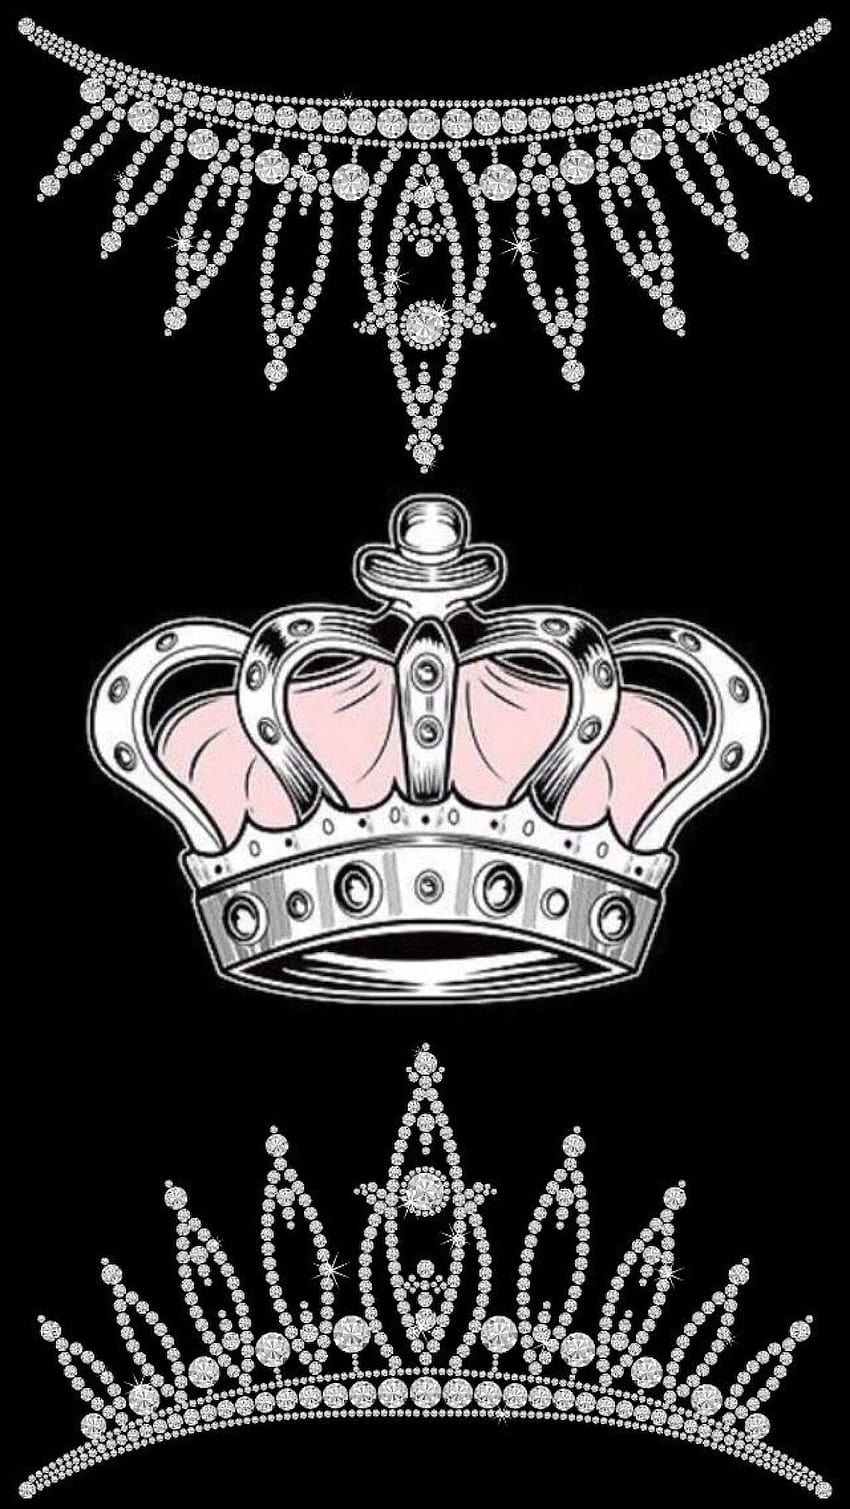 Raja Ratu Mahkota wallpaper ponsel HD